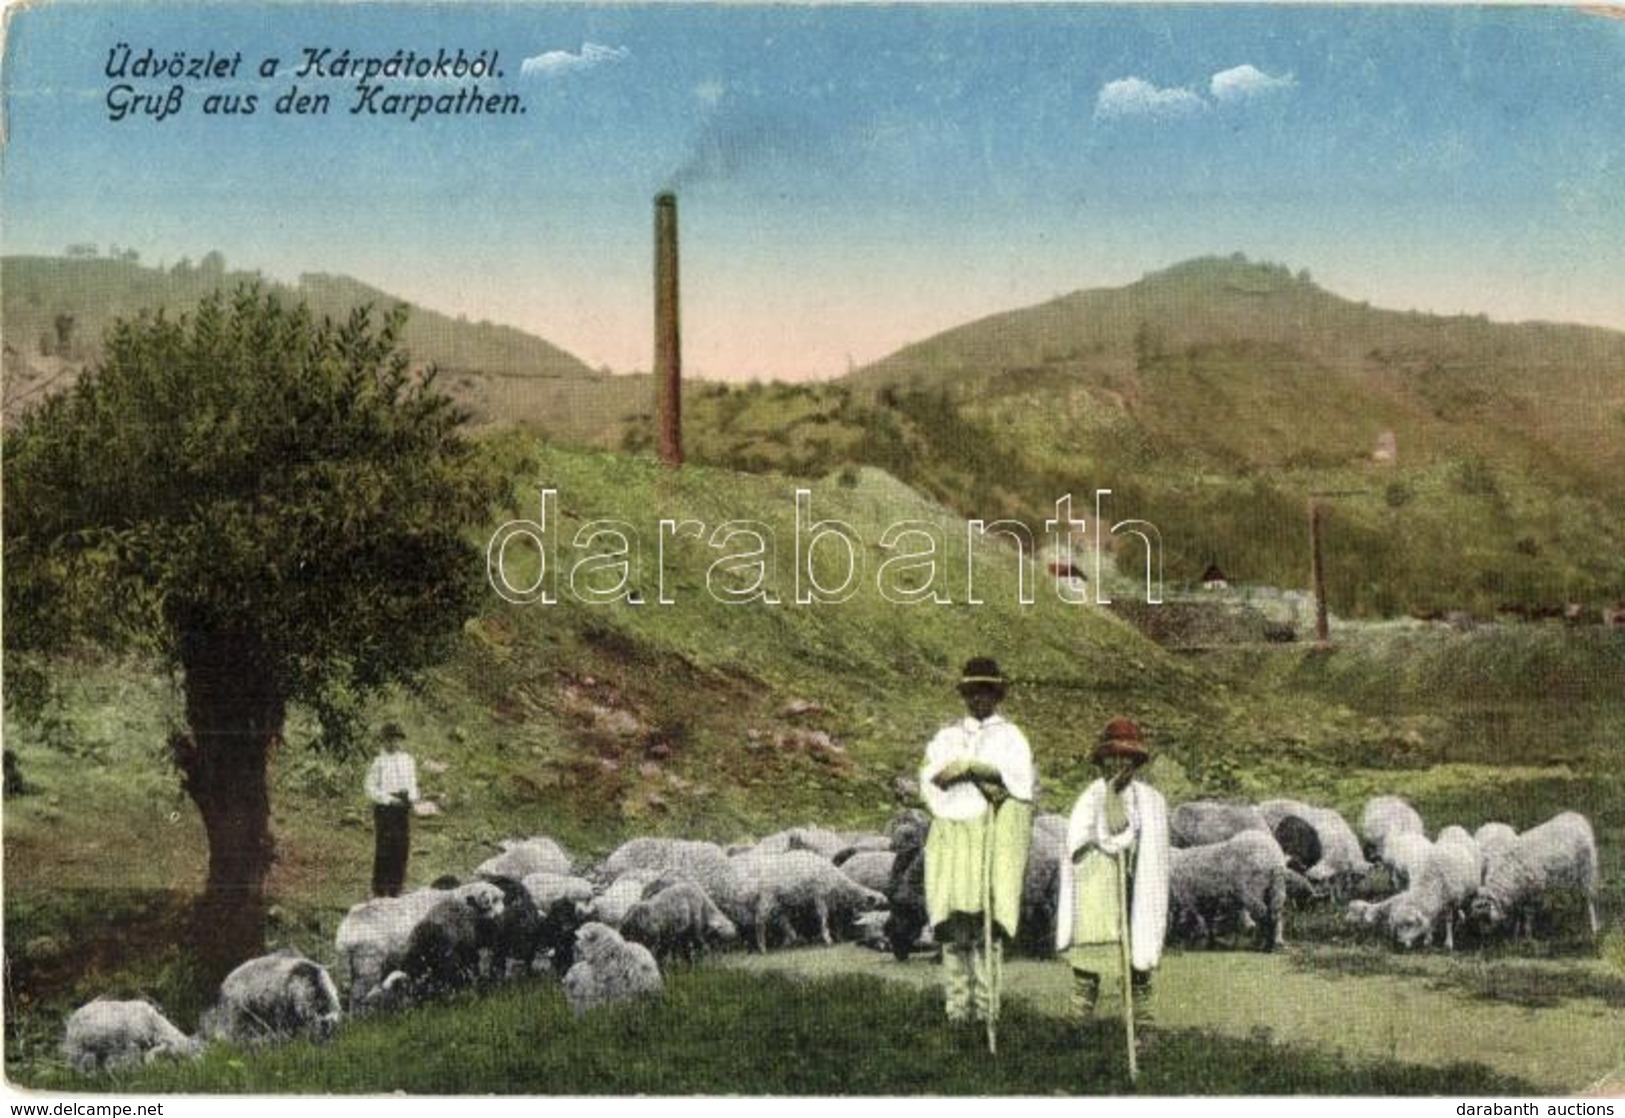 ** 3 Db Régi Képeslap A Kárpátokból / 3 Pre-1945 Postcards From The Carpathian Mountains - Unclassified